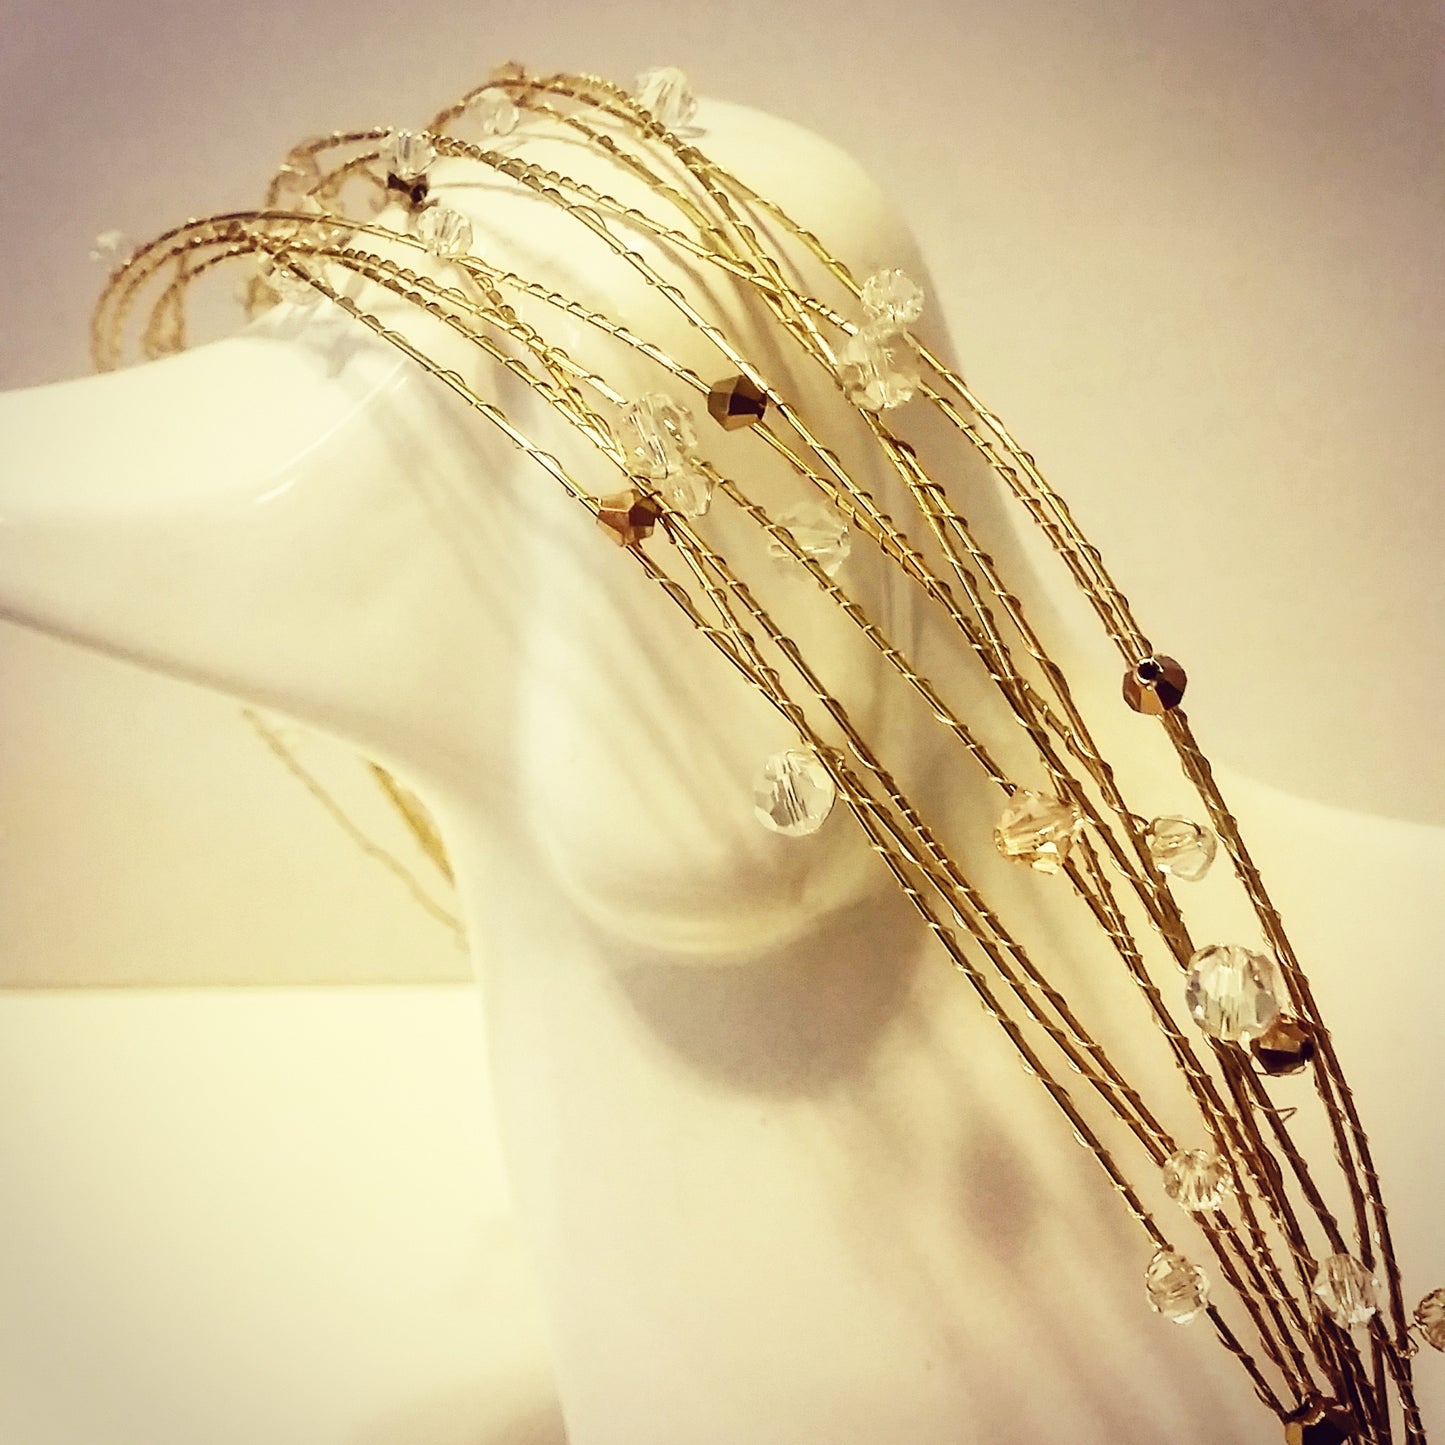 Swarovski Element Crystals and glass bead headpiece